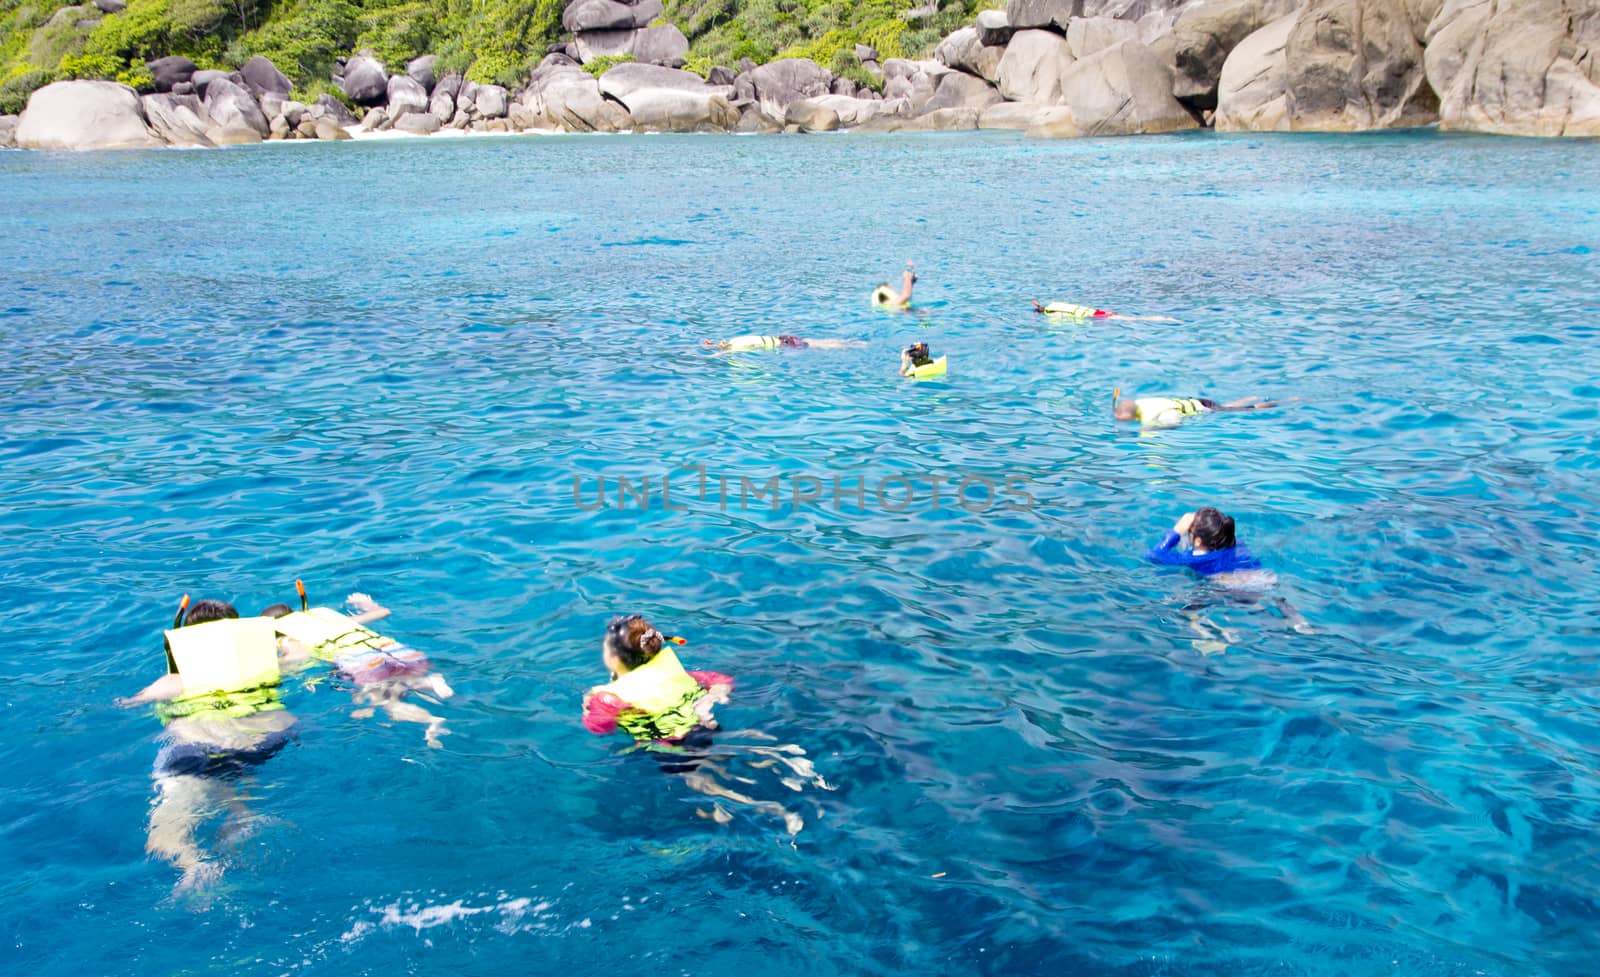 Snorkeling in clean water over coral reef by wyoosumran